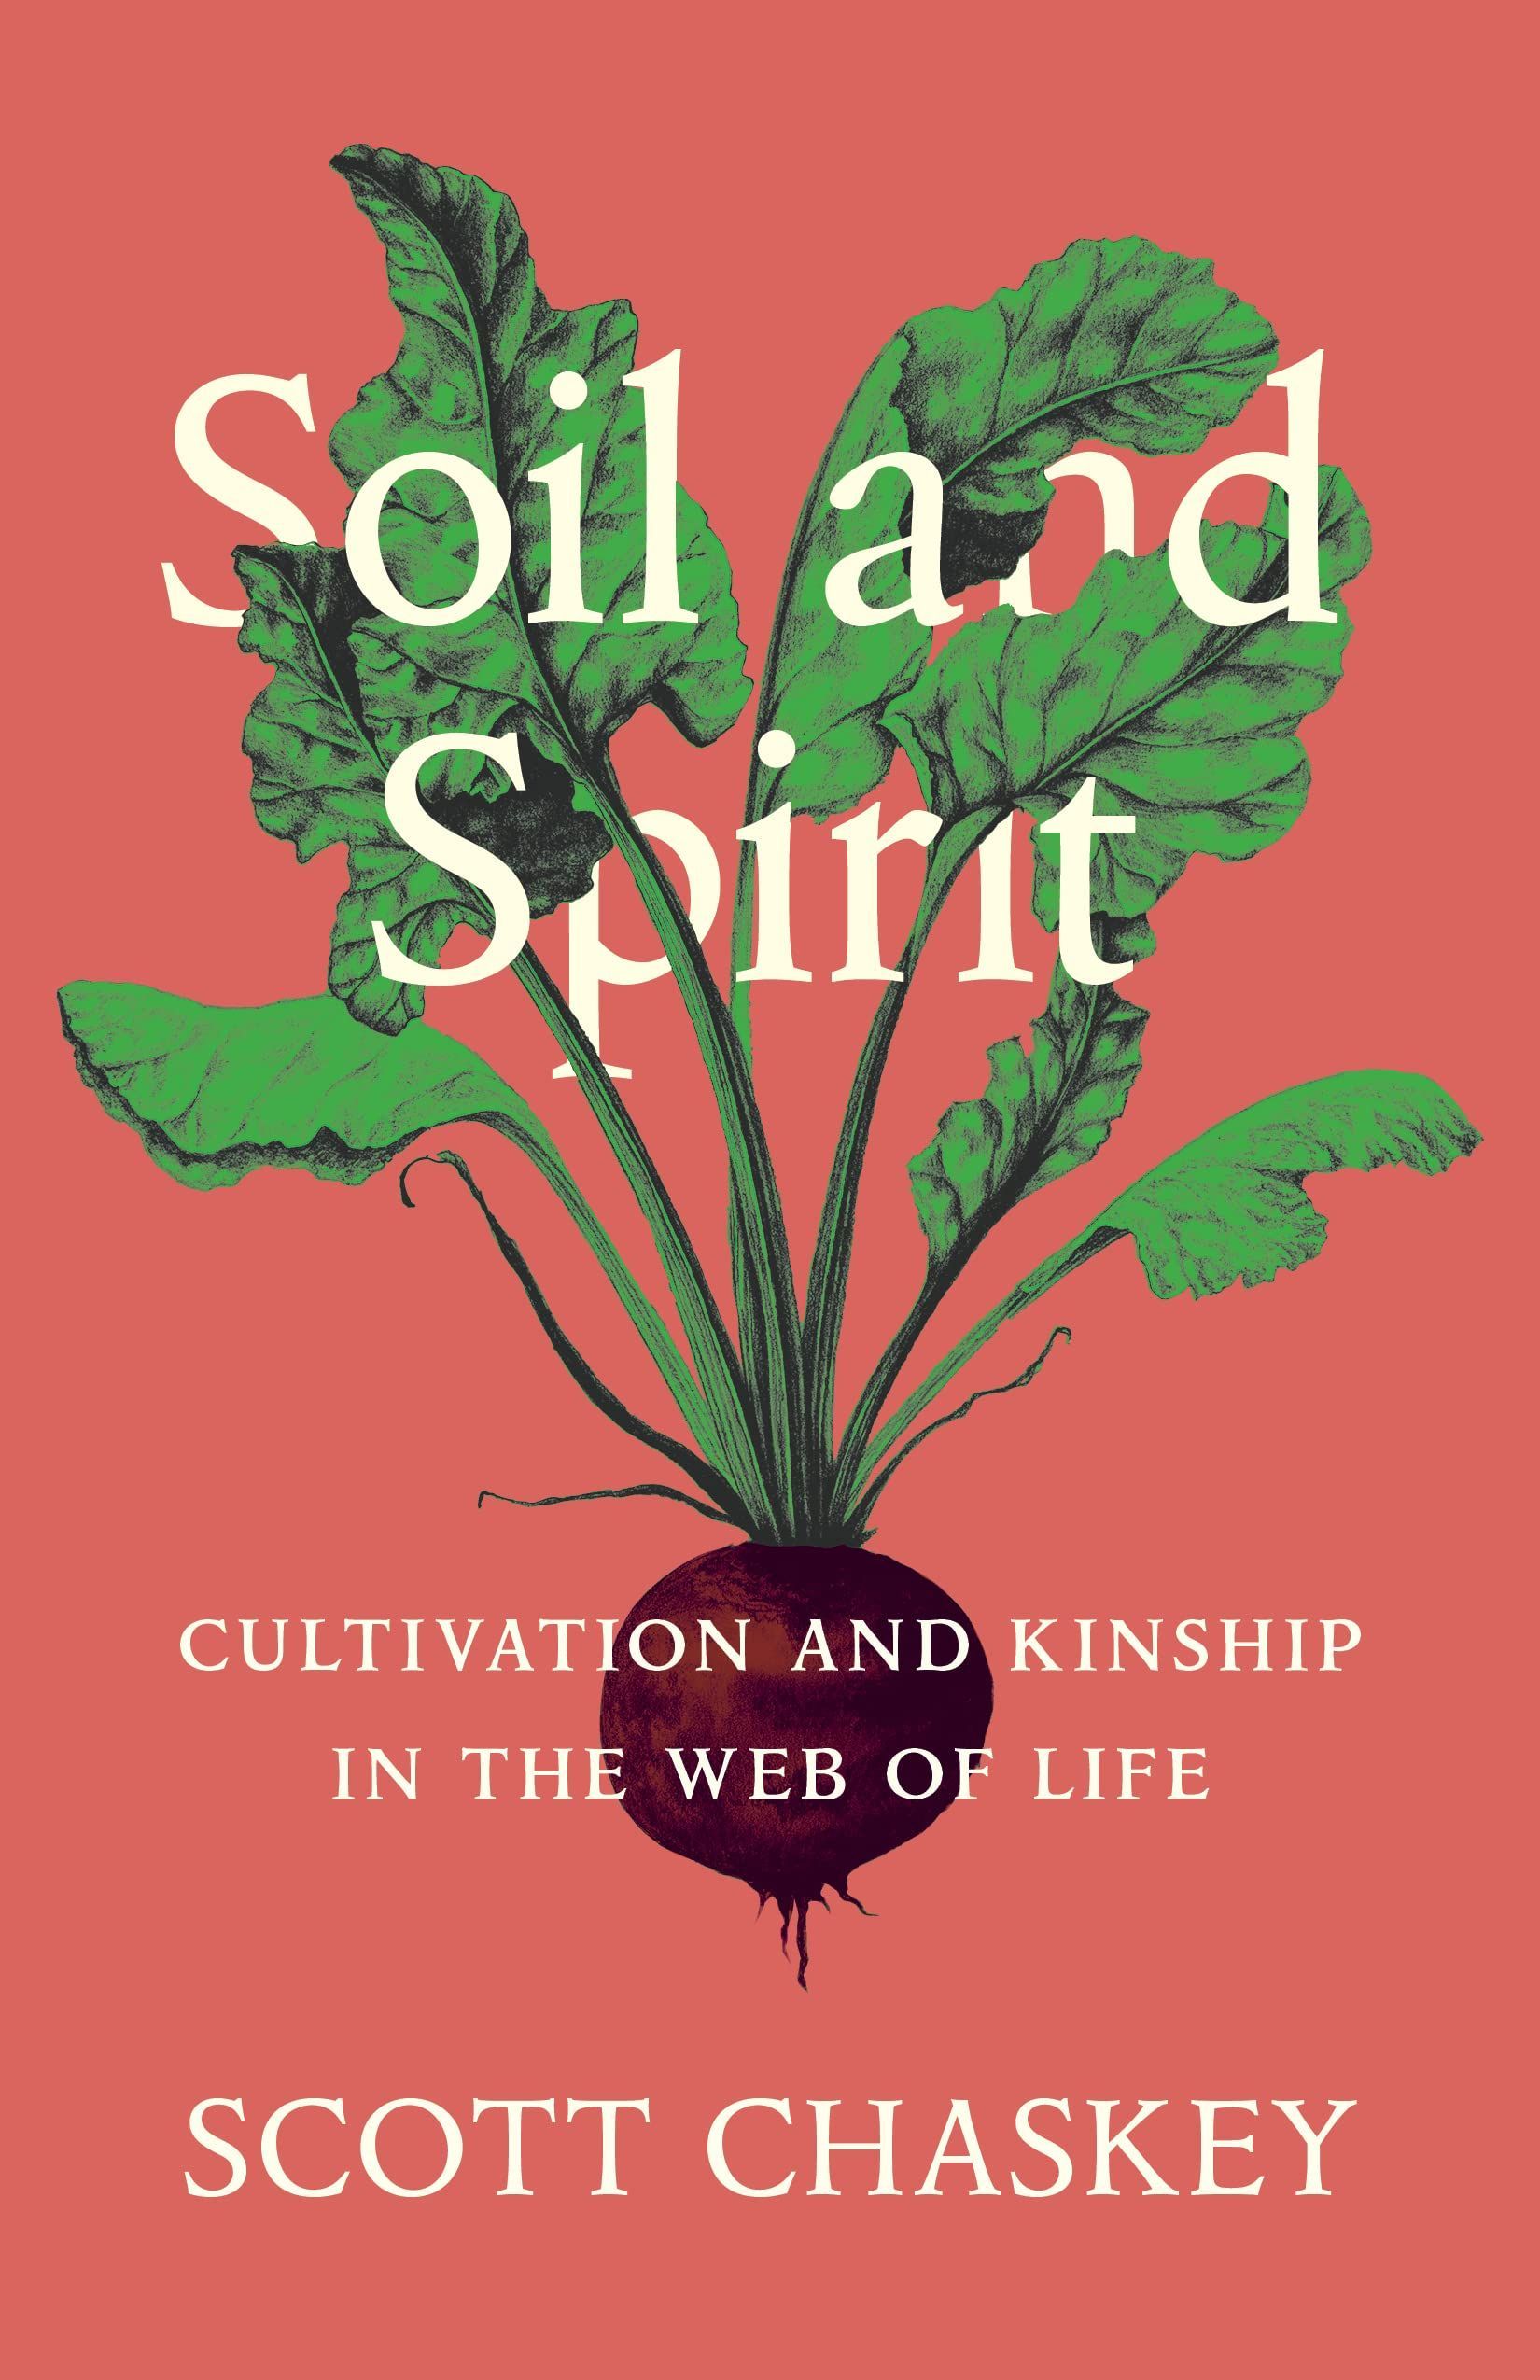 Romantic Myths of American Environmentalism: On Scott Chaskey’s “Soil and Spirit”